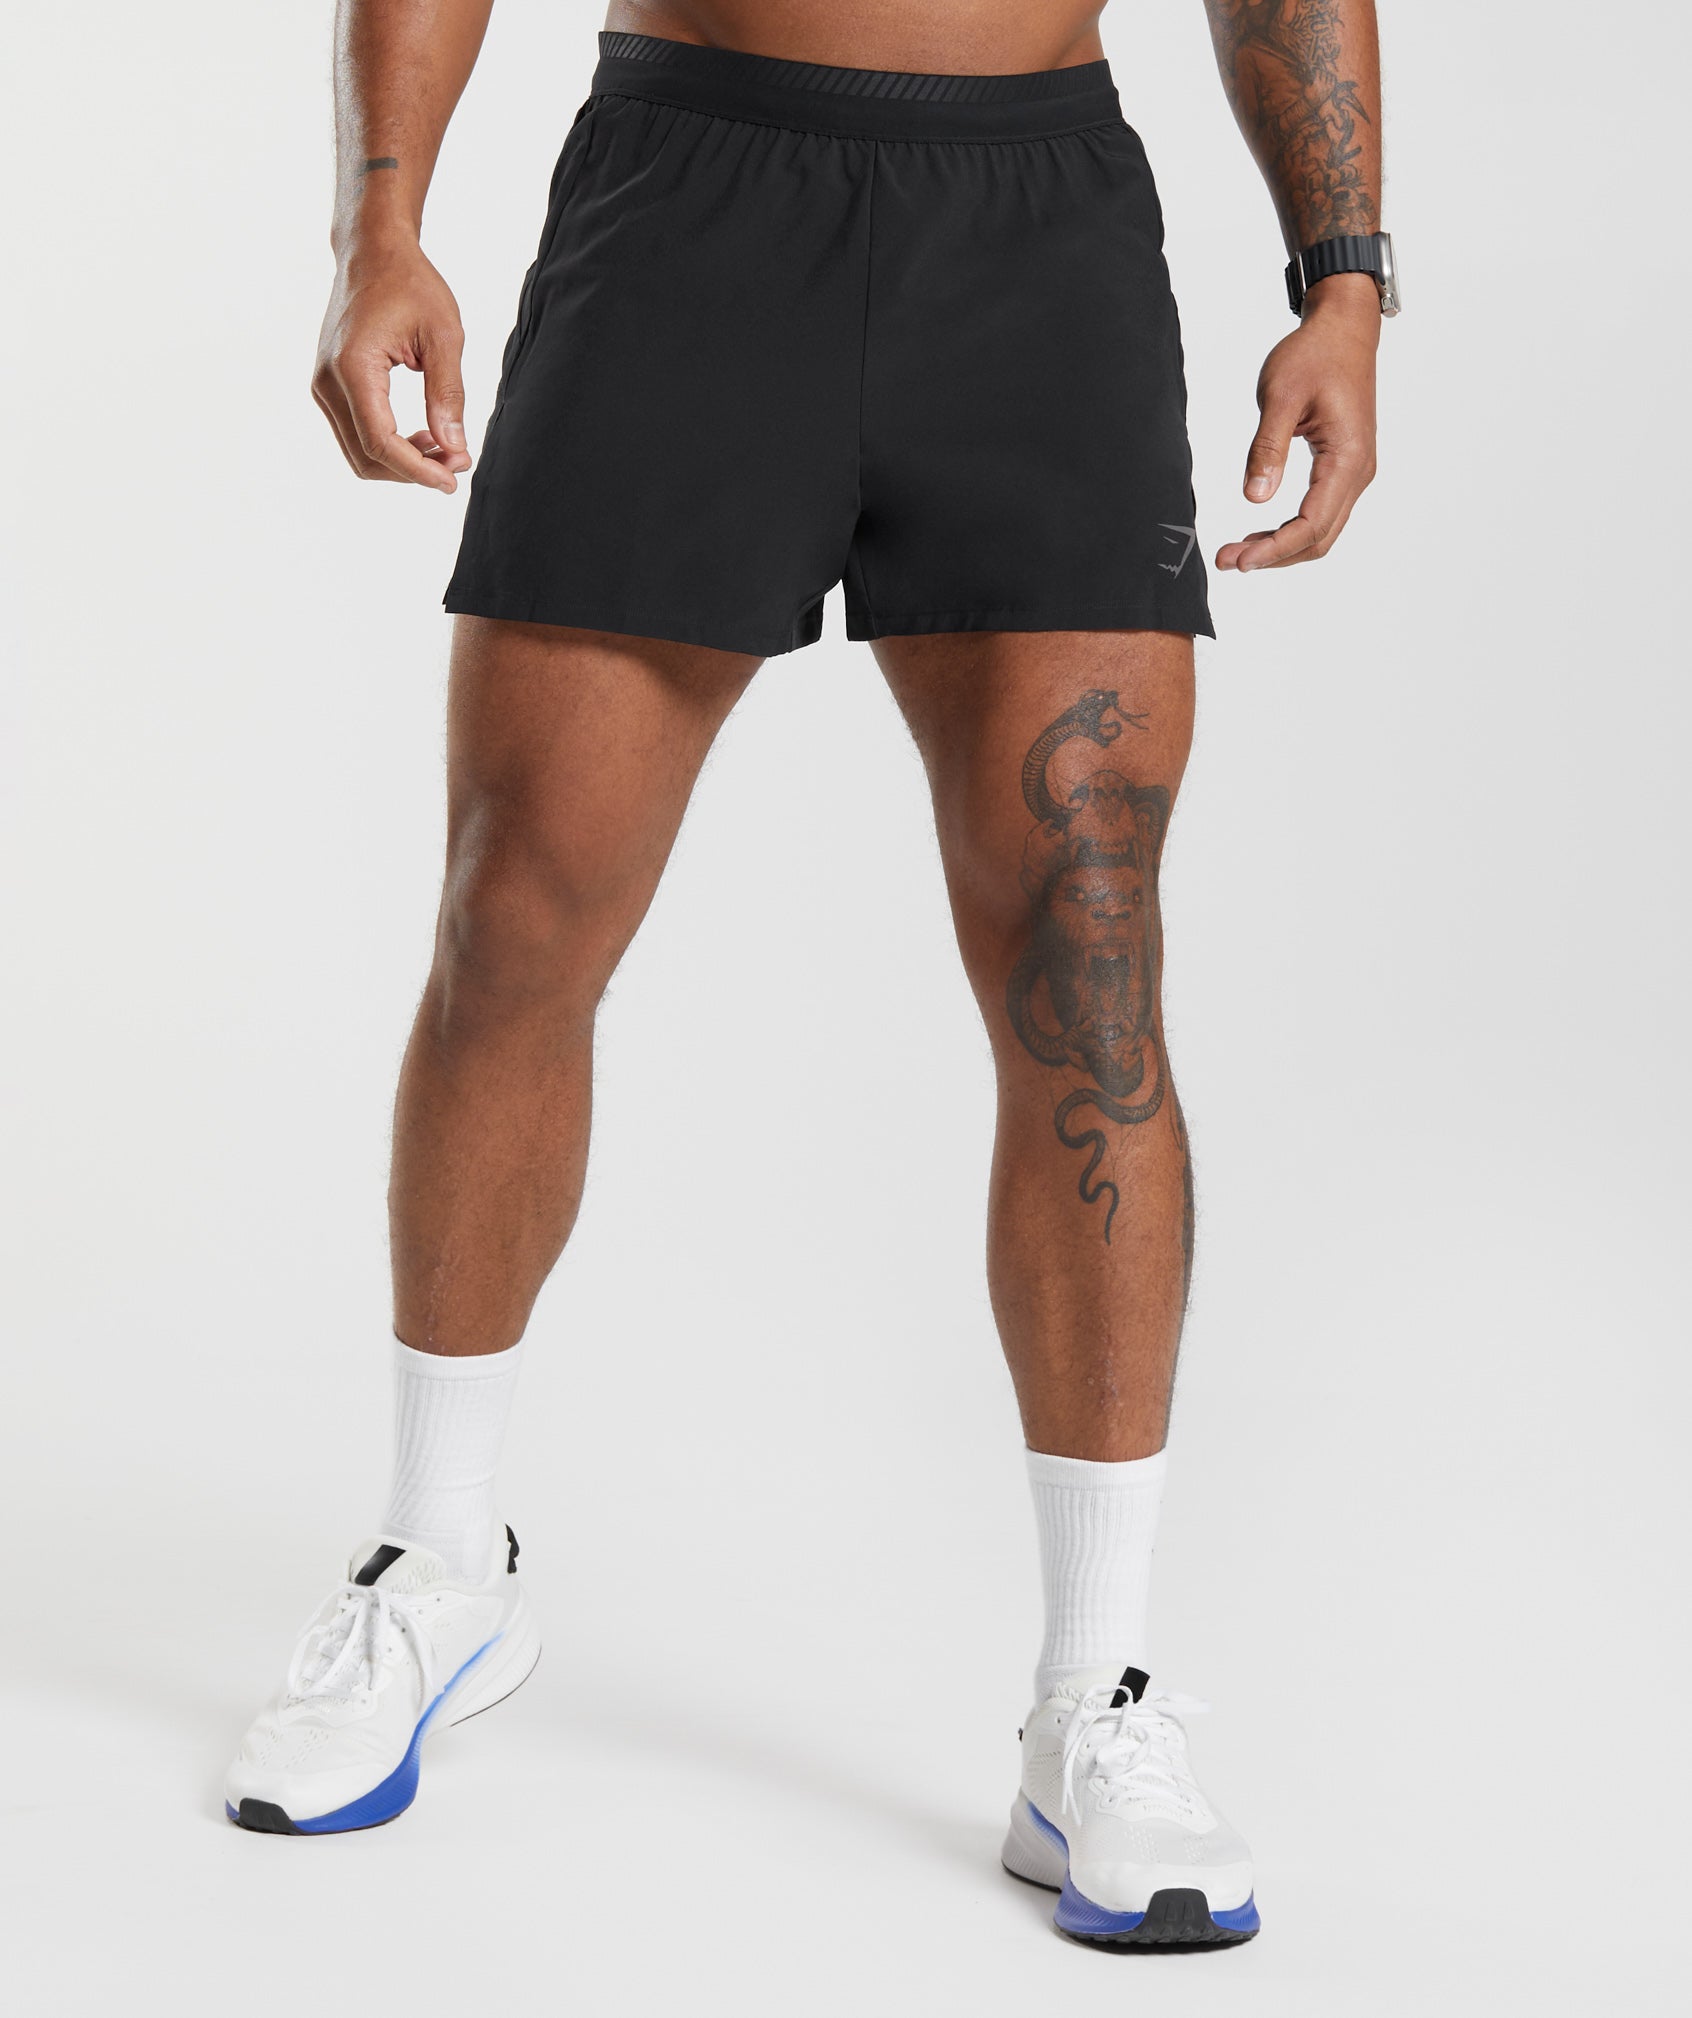 Men's Training Shorts, Gym & Workout Shorts